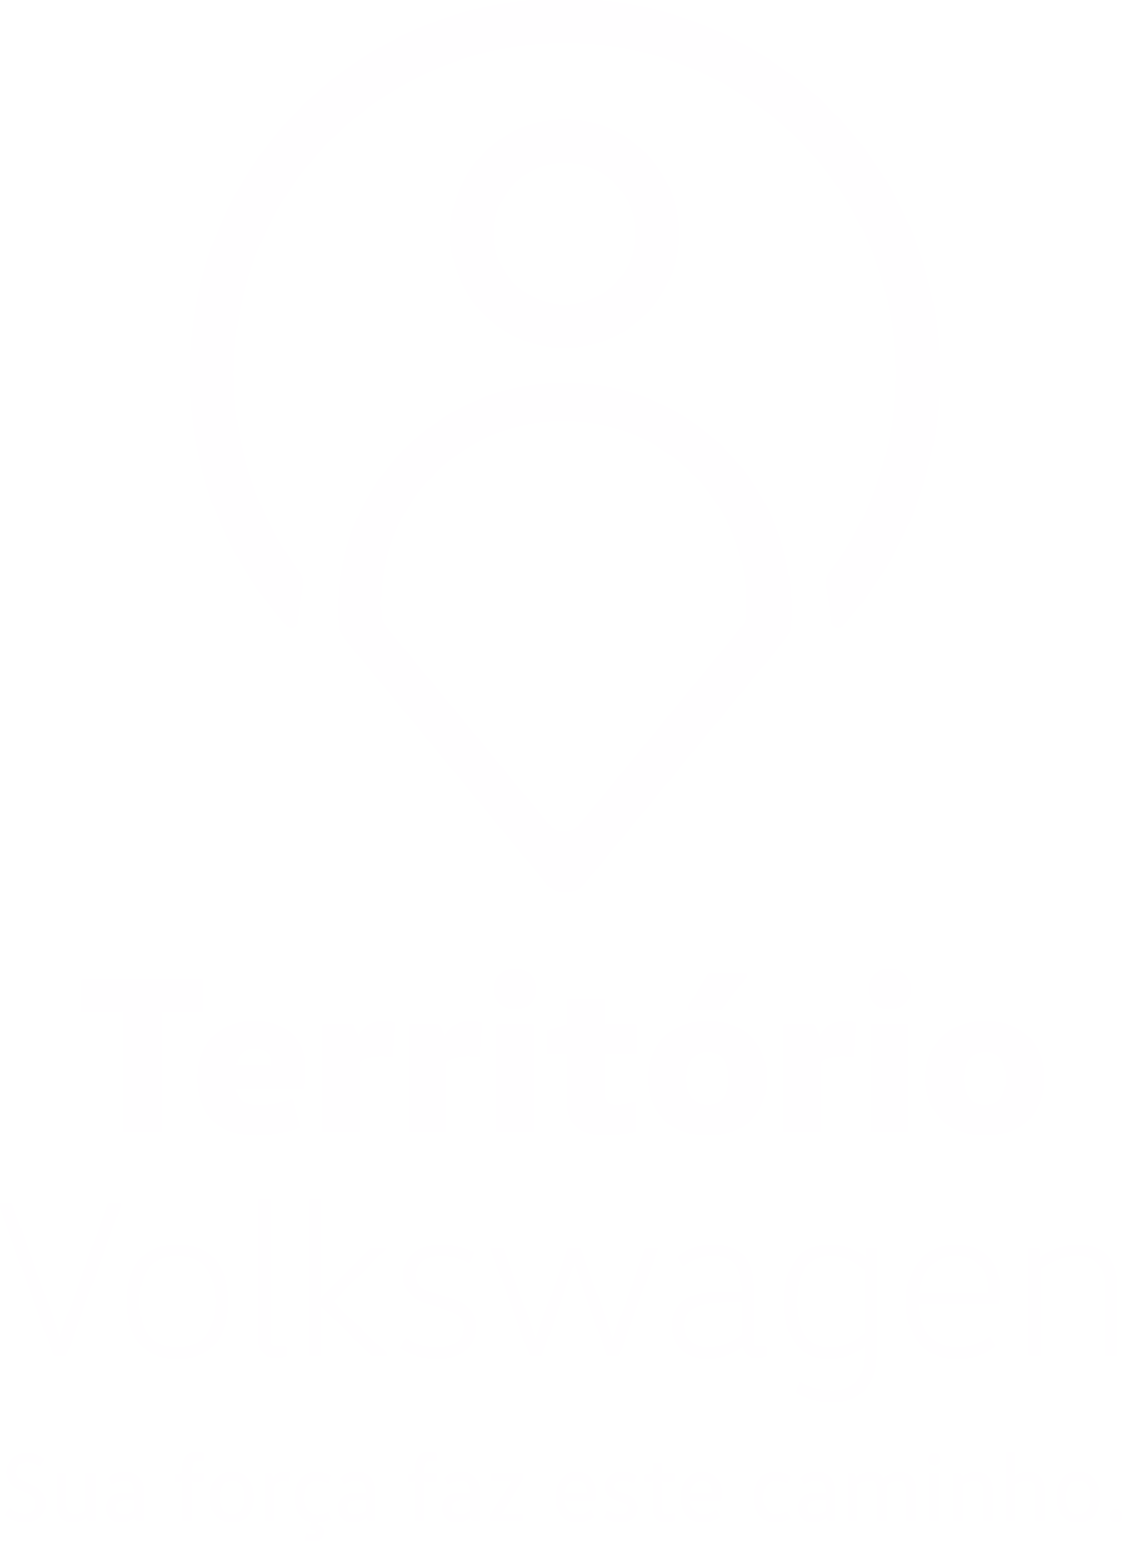 Território Volkswagen - Juntos vamos mais longe.